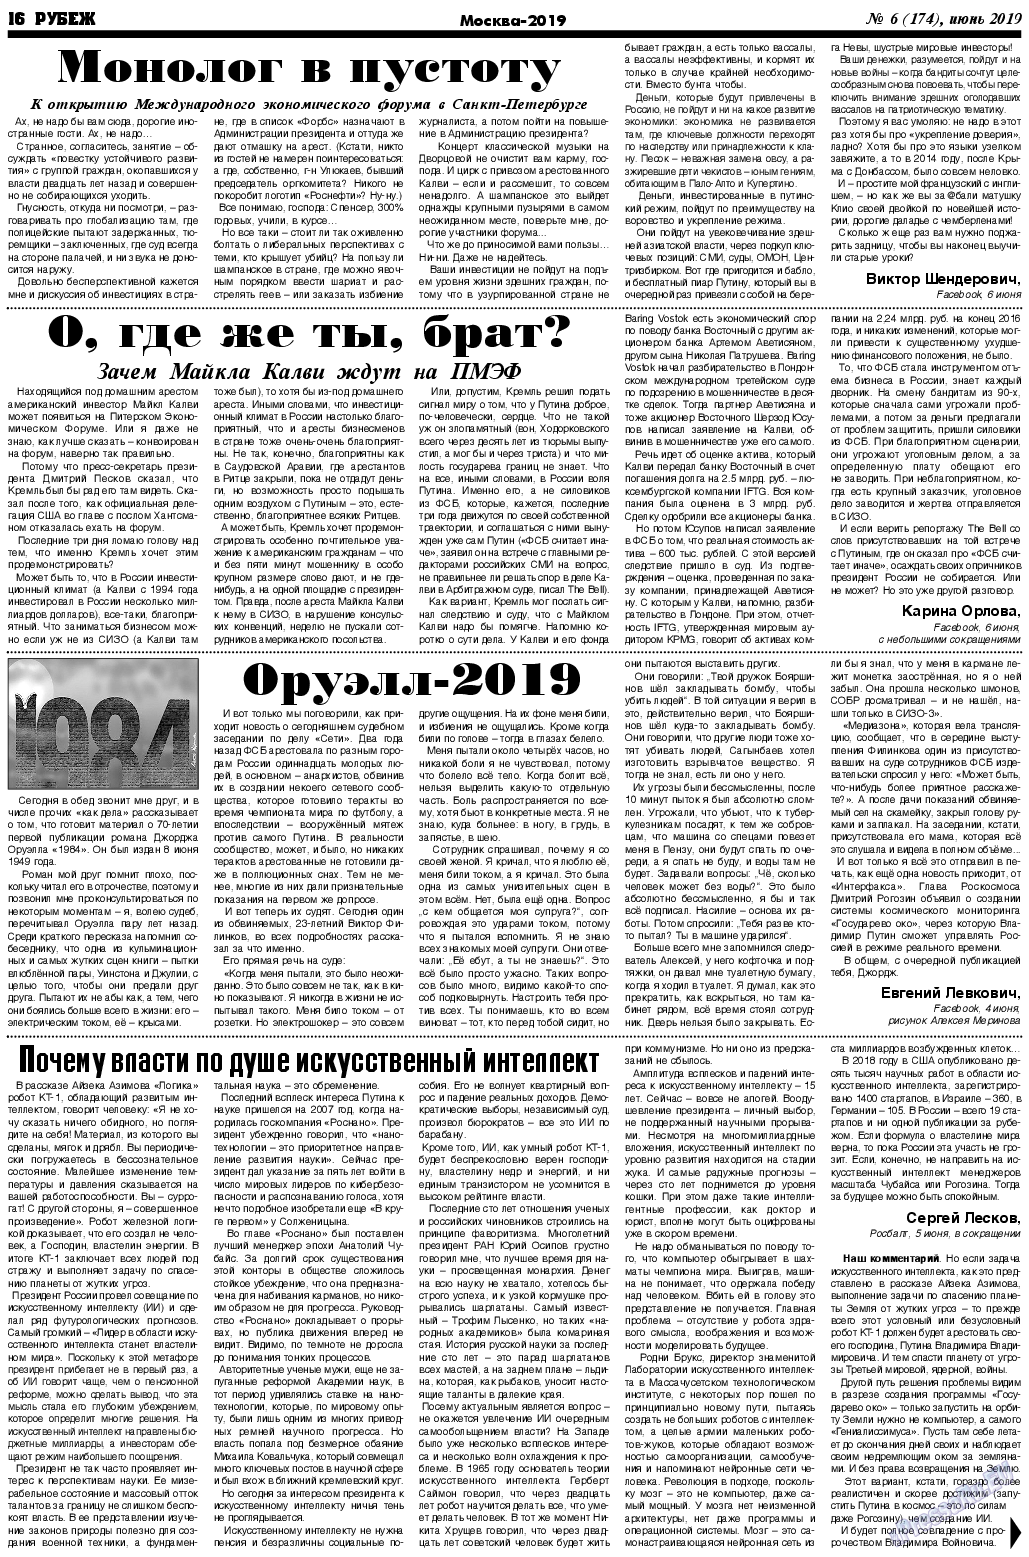 Рубеж, газета. 2019 №6 стр.16